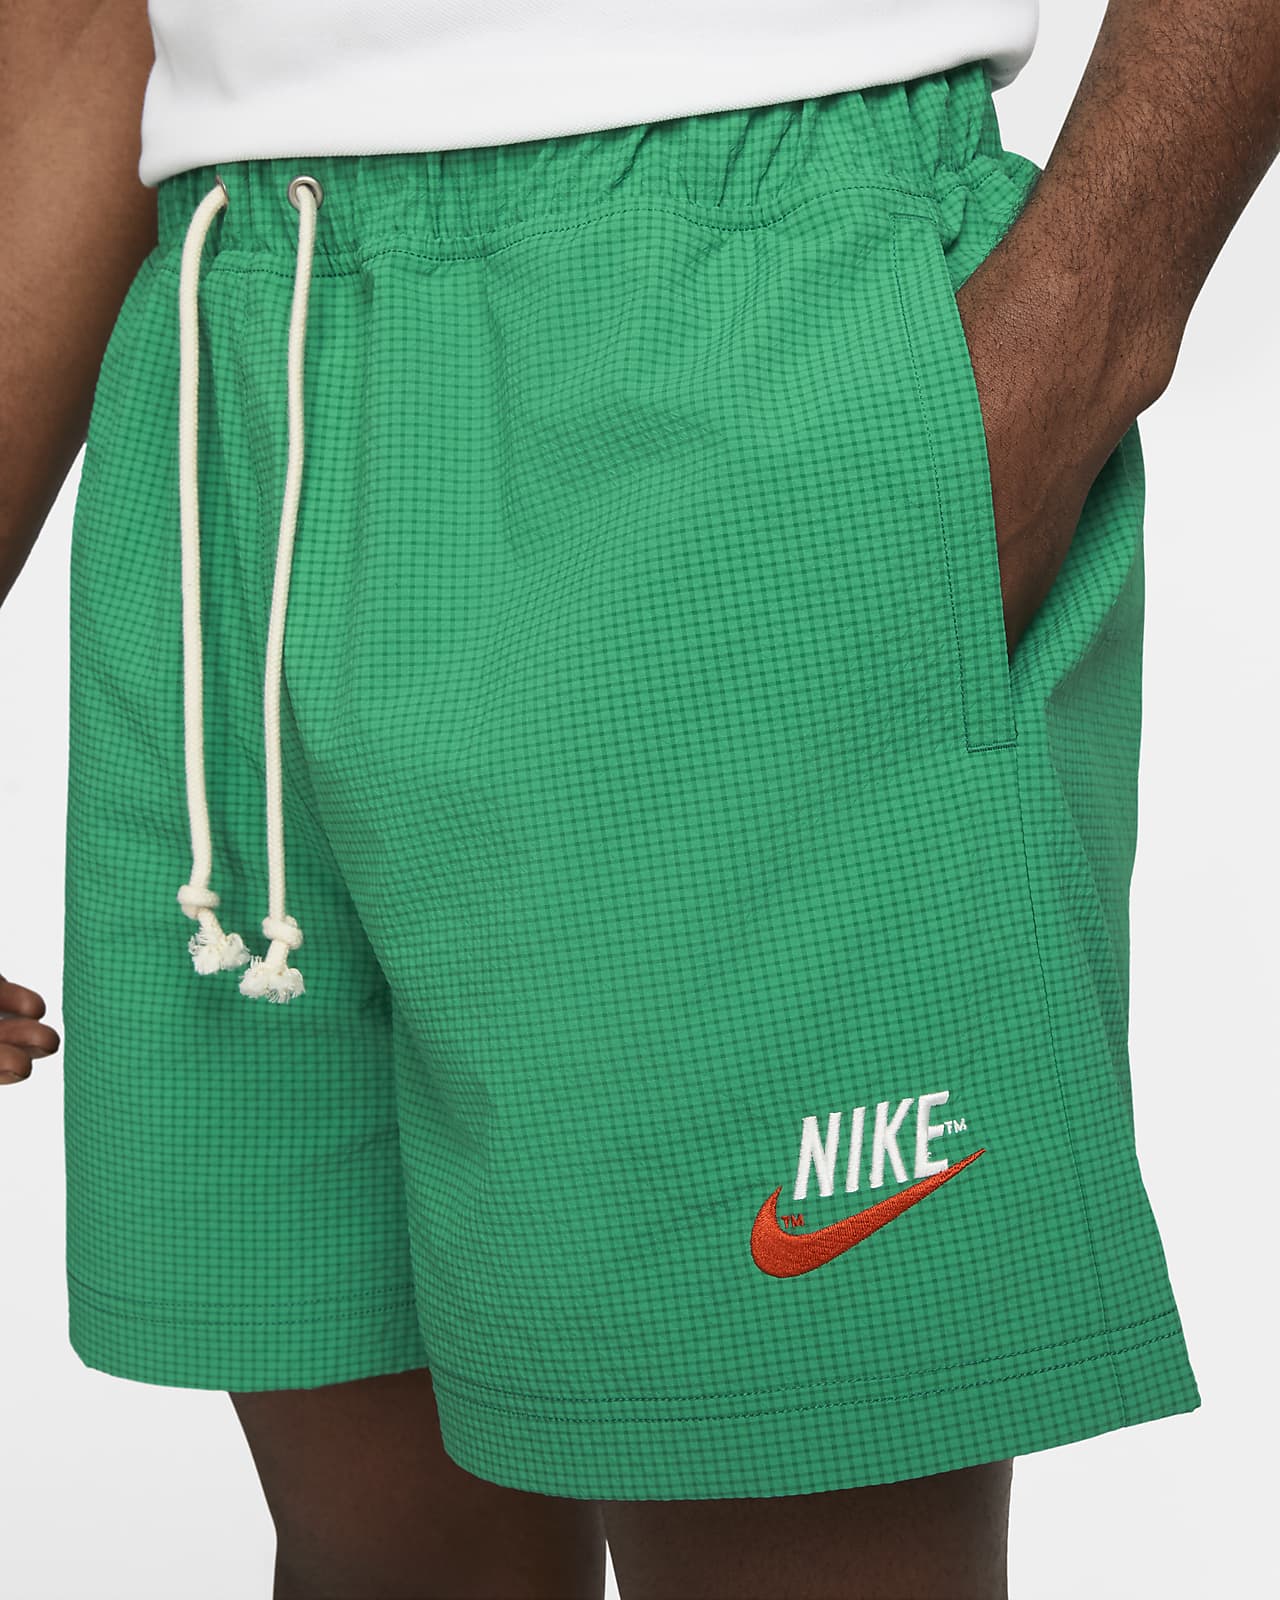 Ideal me quejo Íncubo Nike Sportswear Men's Lined Woven Shorts. Nike.com